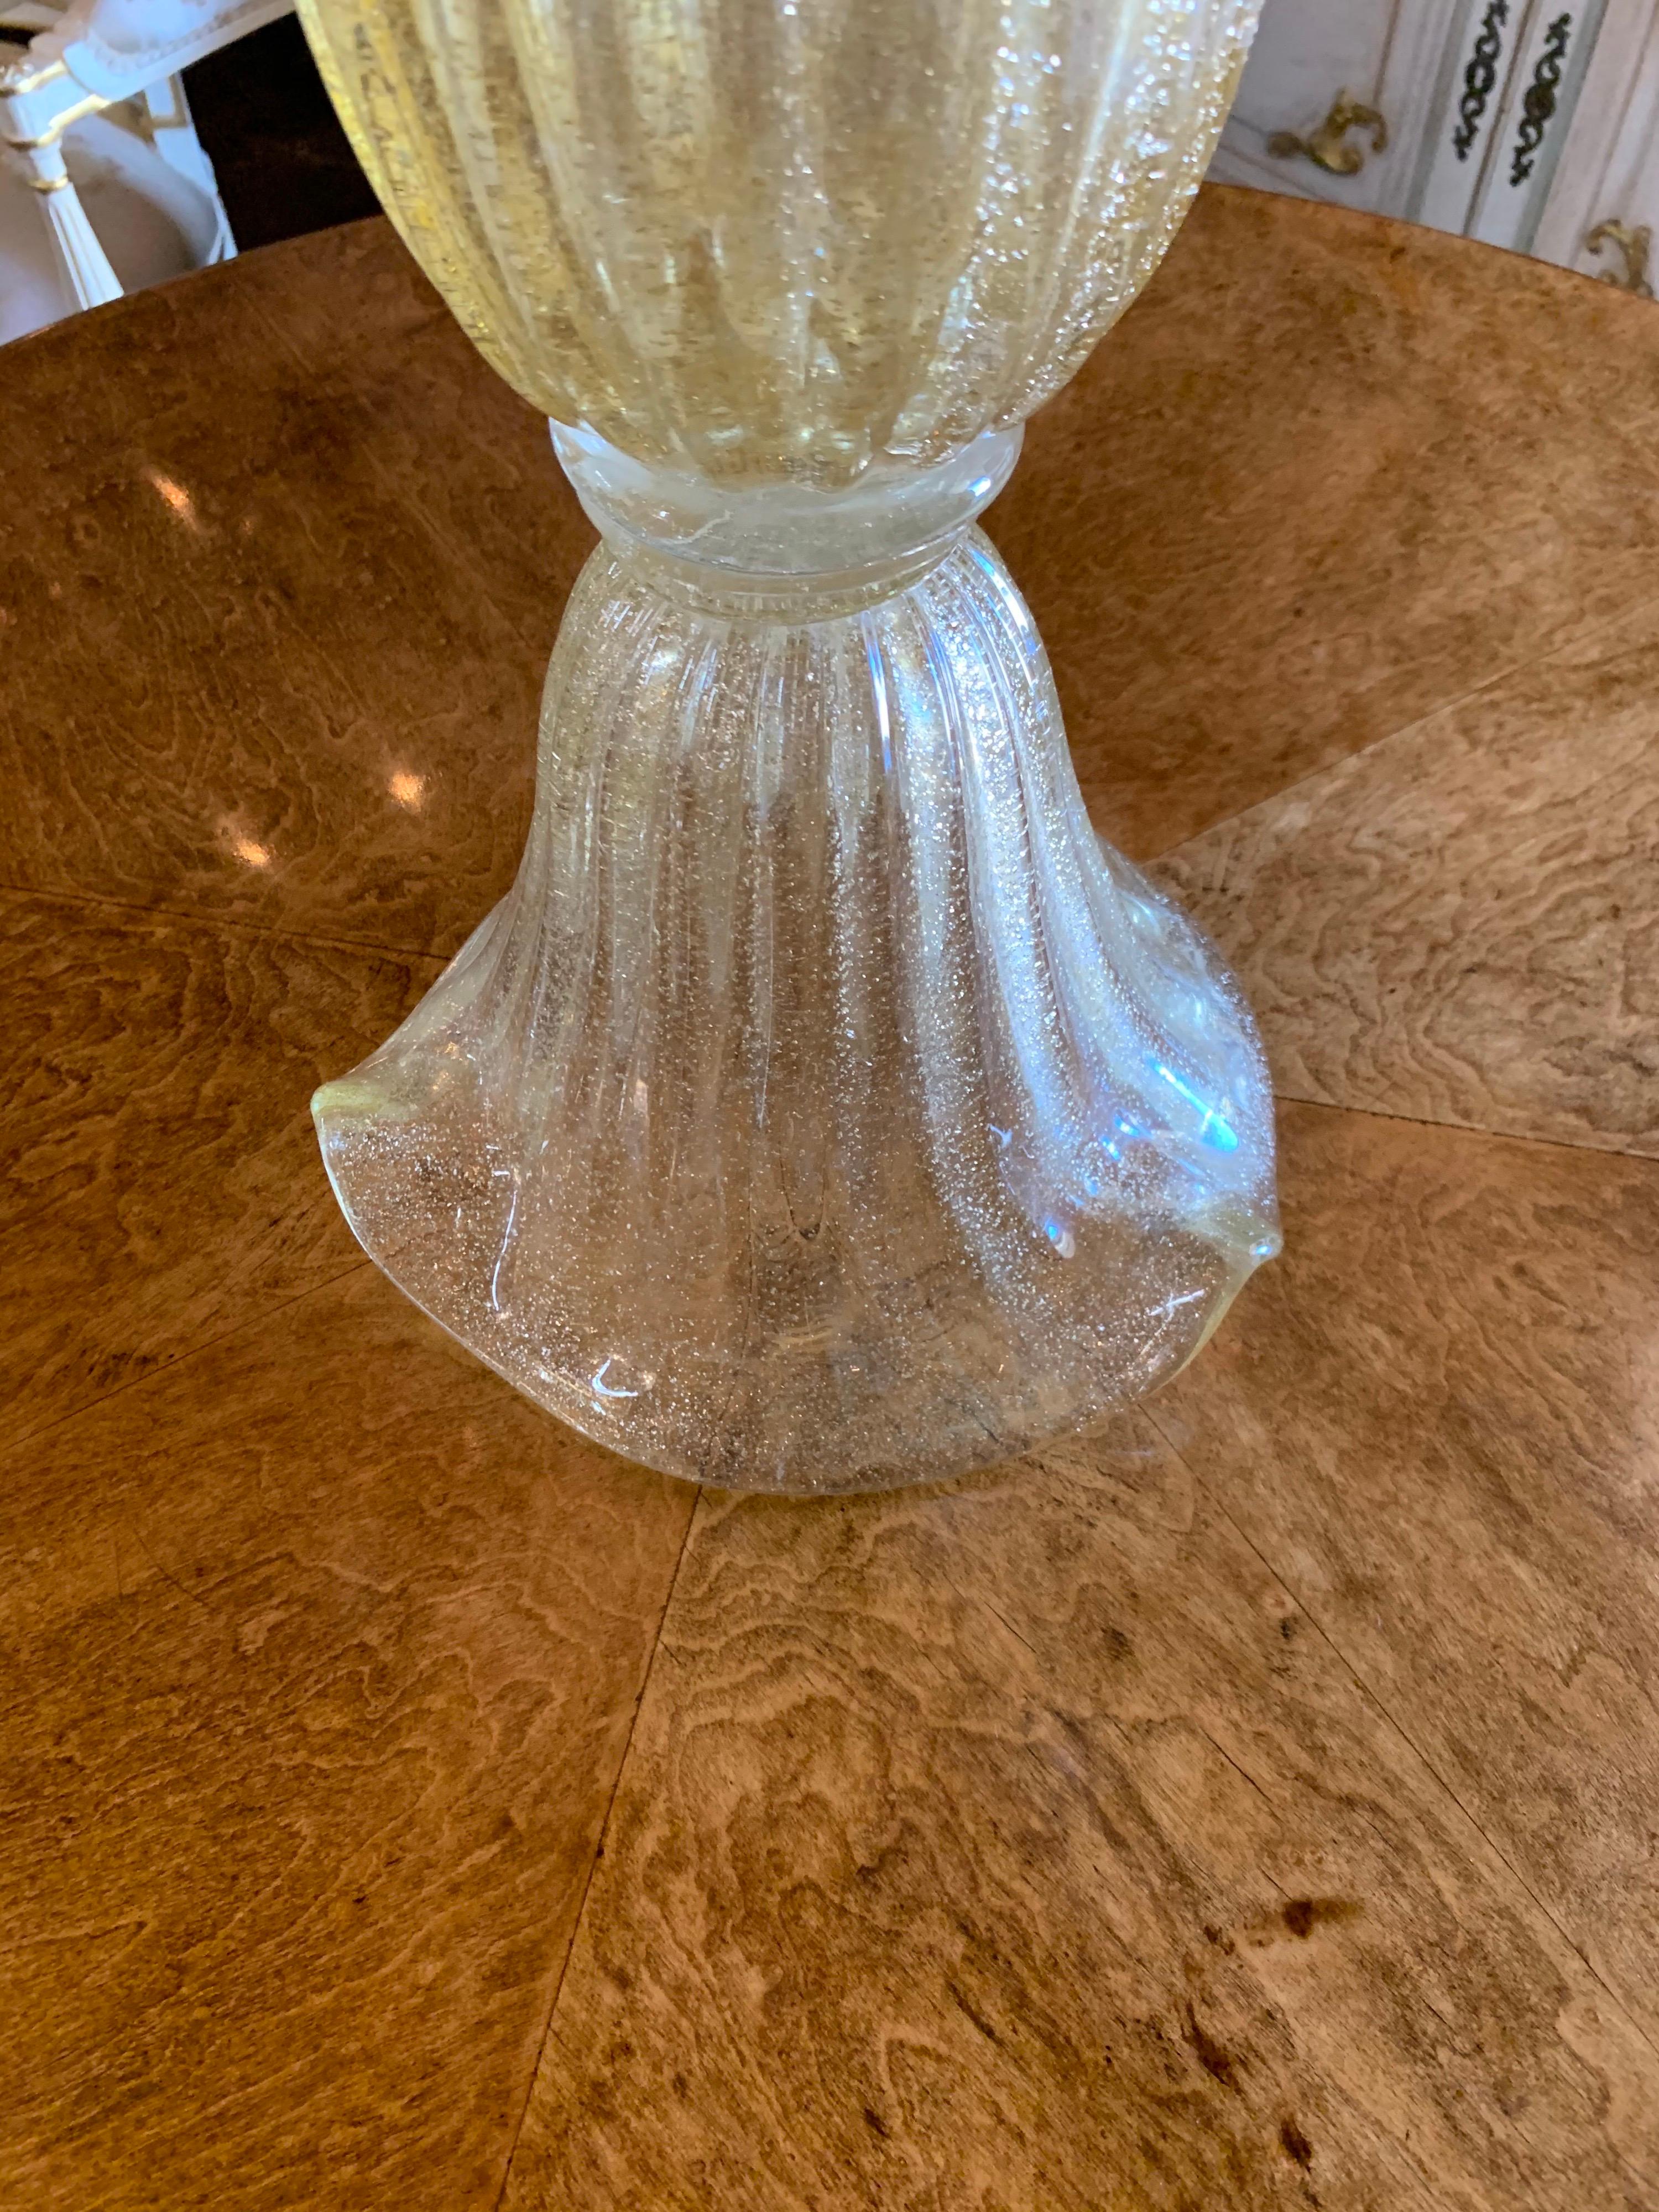 murano glass with gold flecks